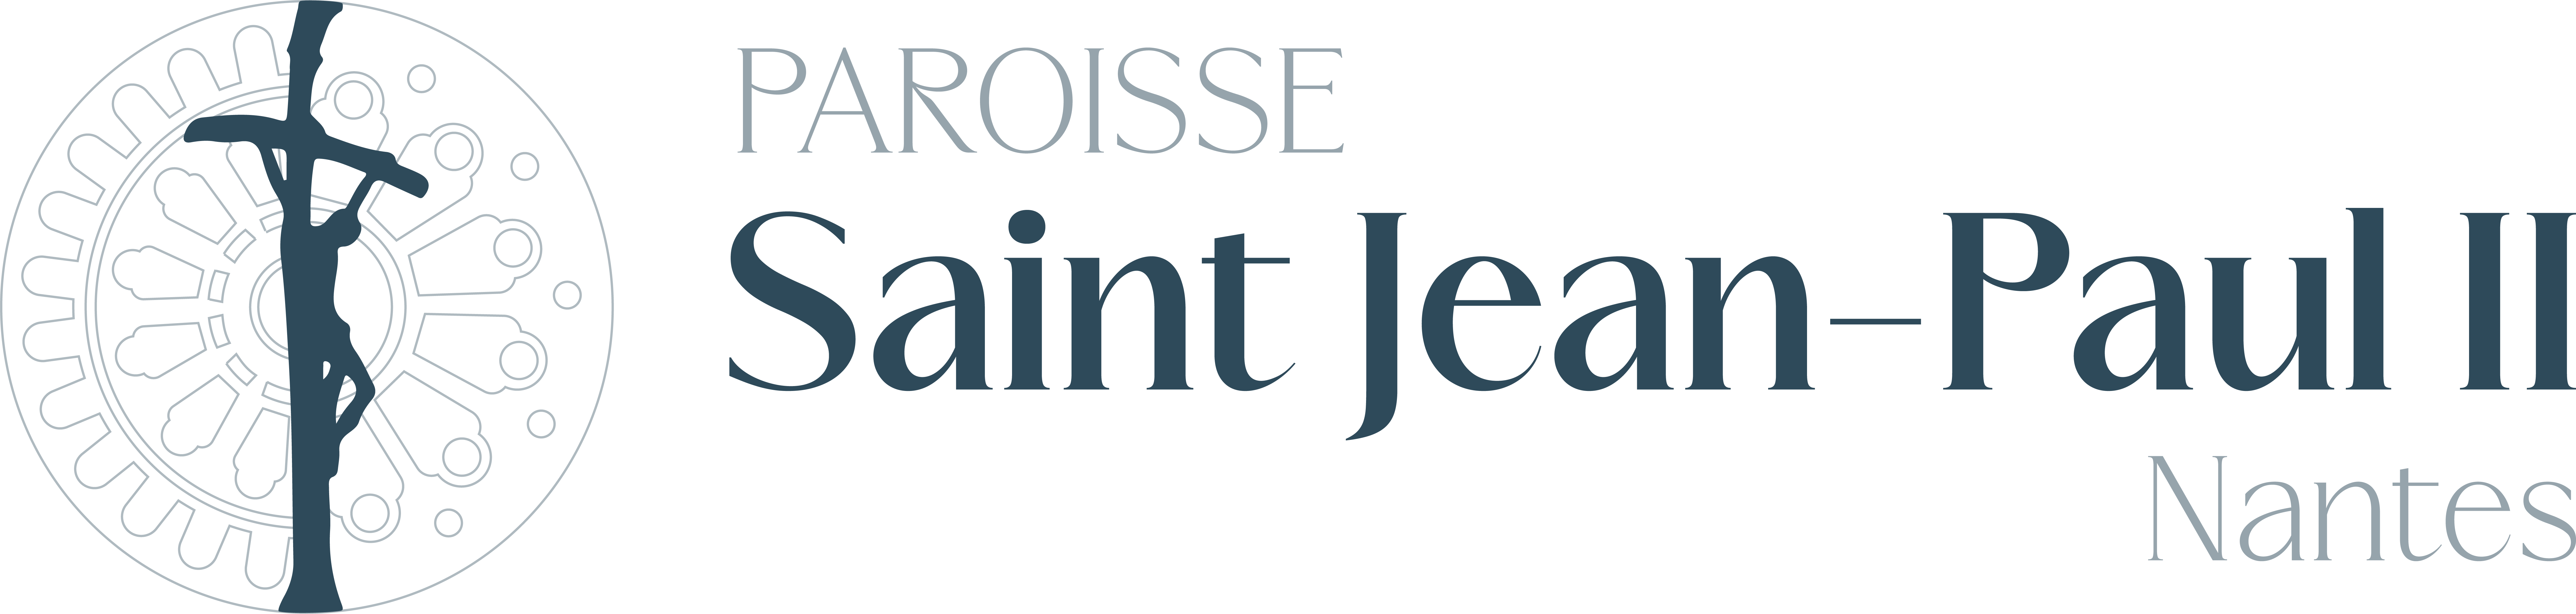 Paroisse Saint Jean-Paul II